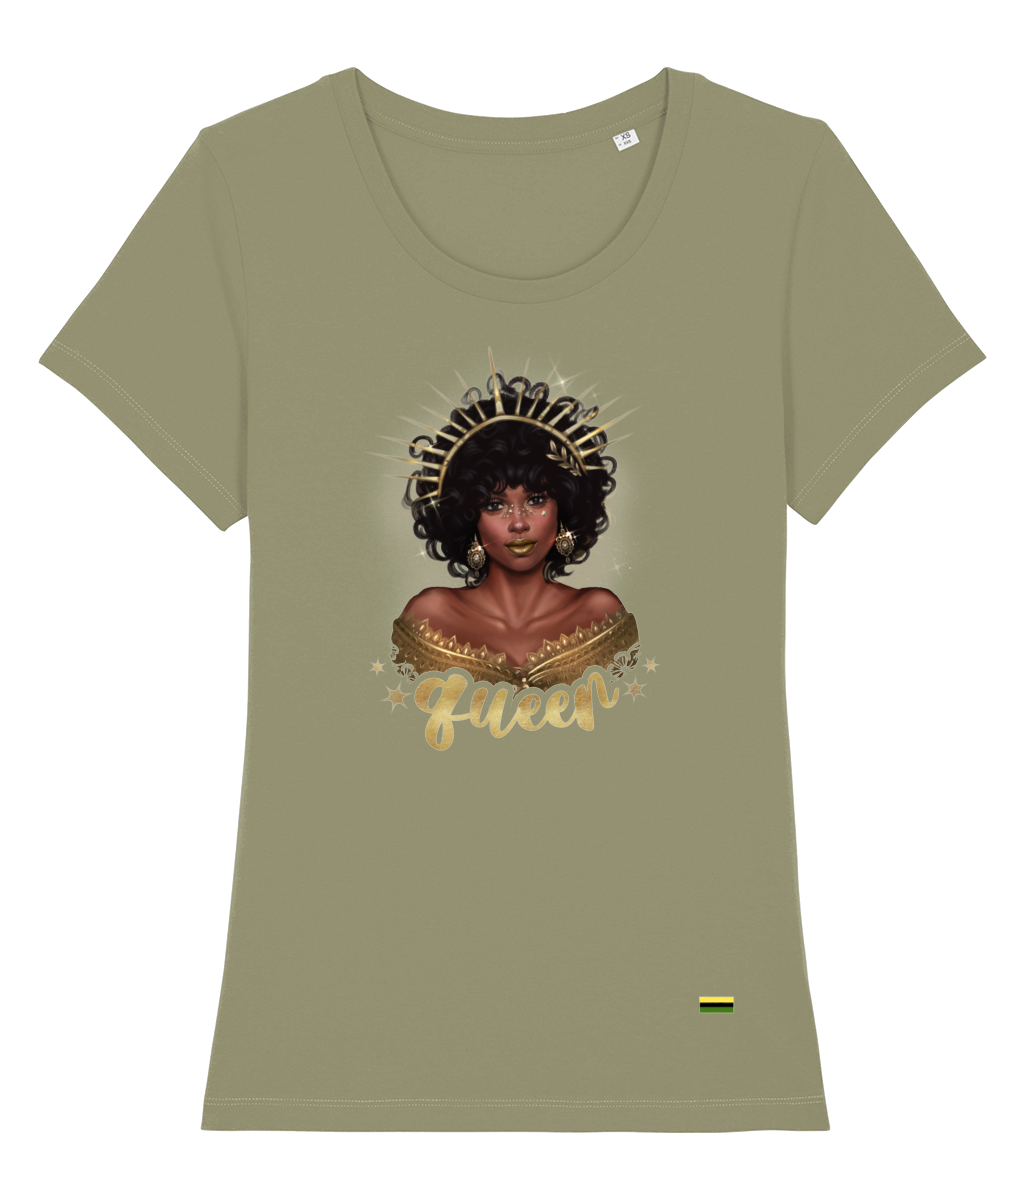 Queen| Fitted Women's Organic Cotton T Shirt